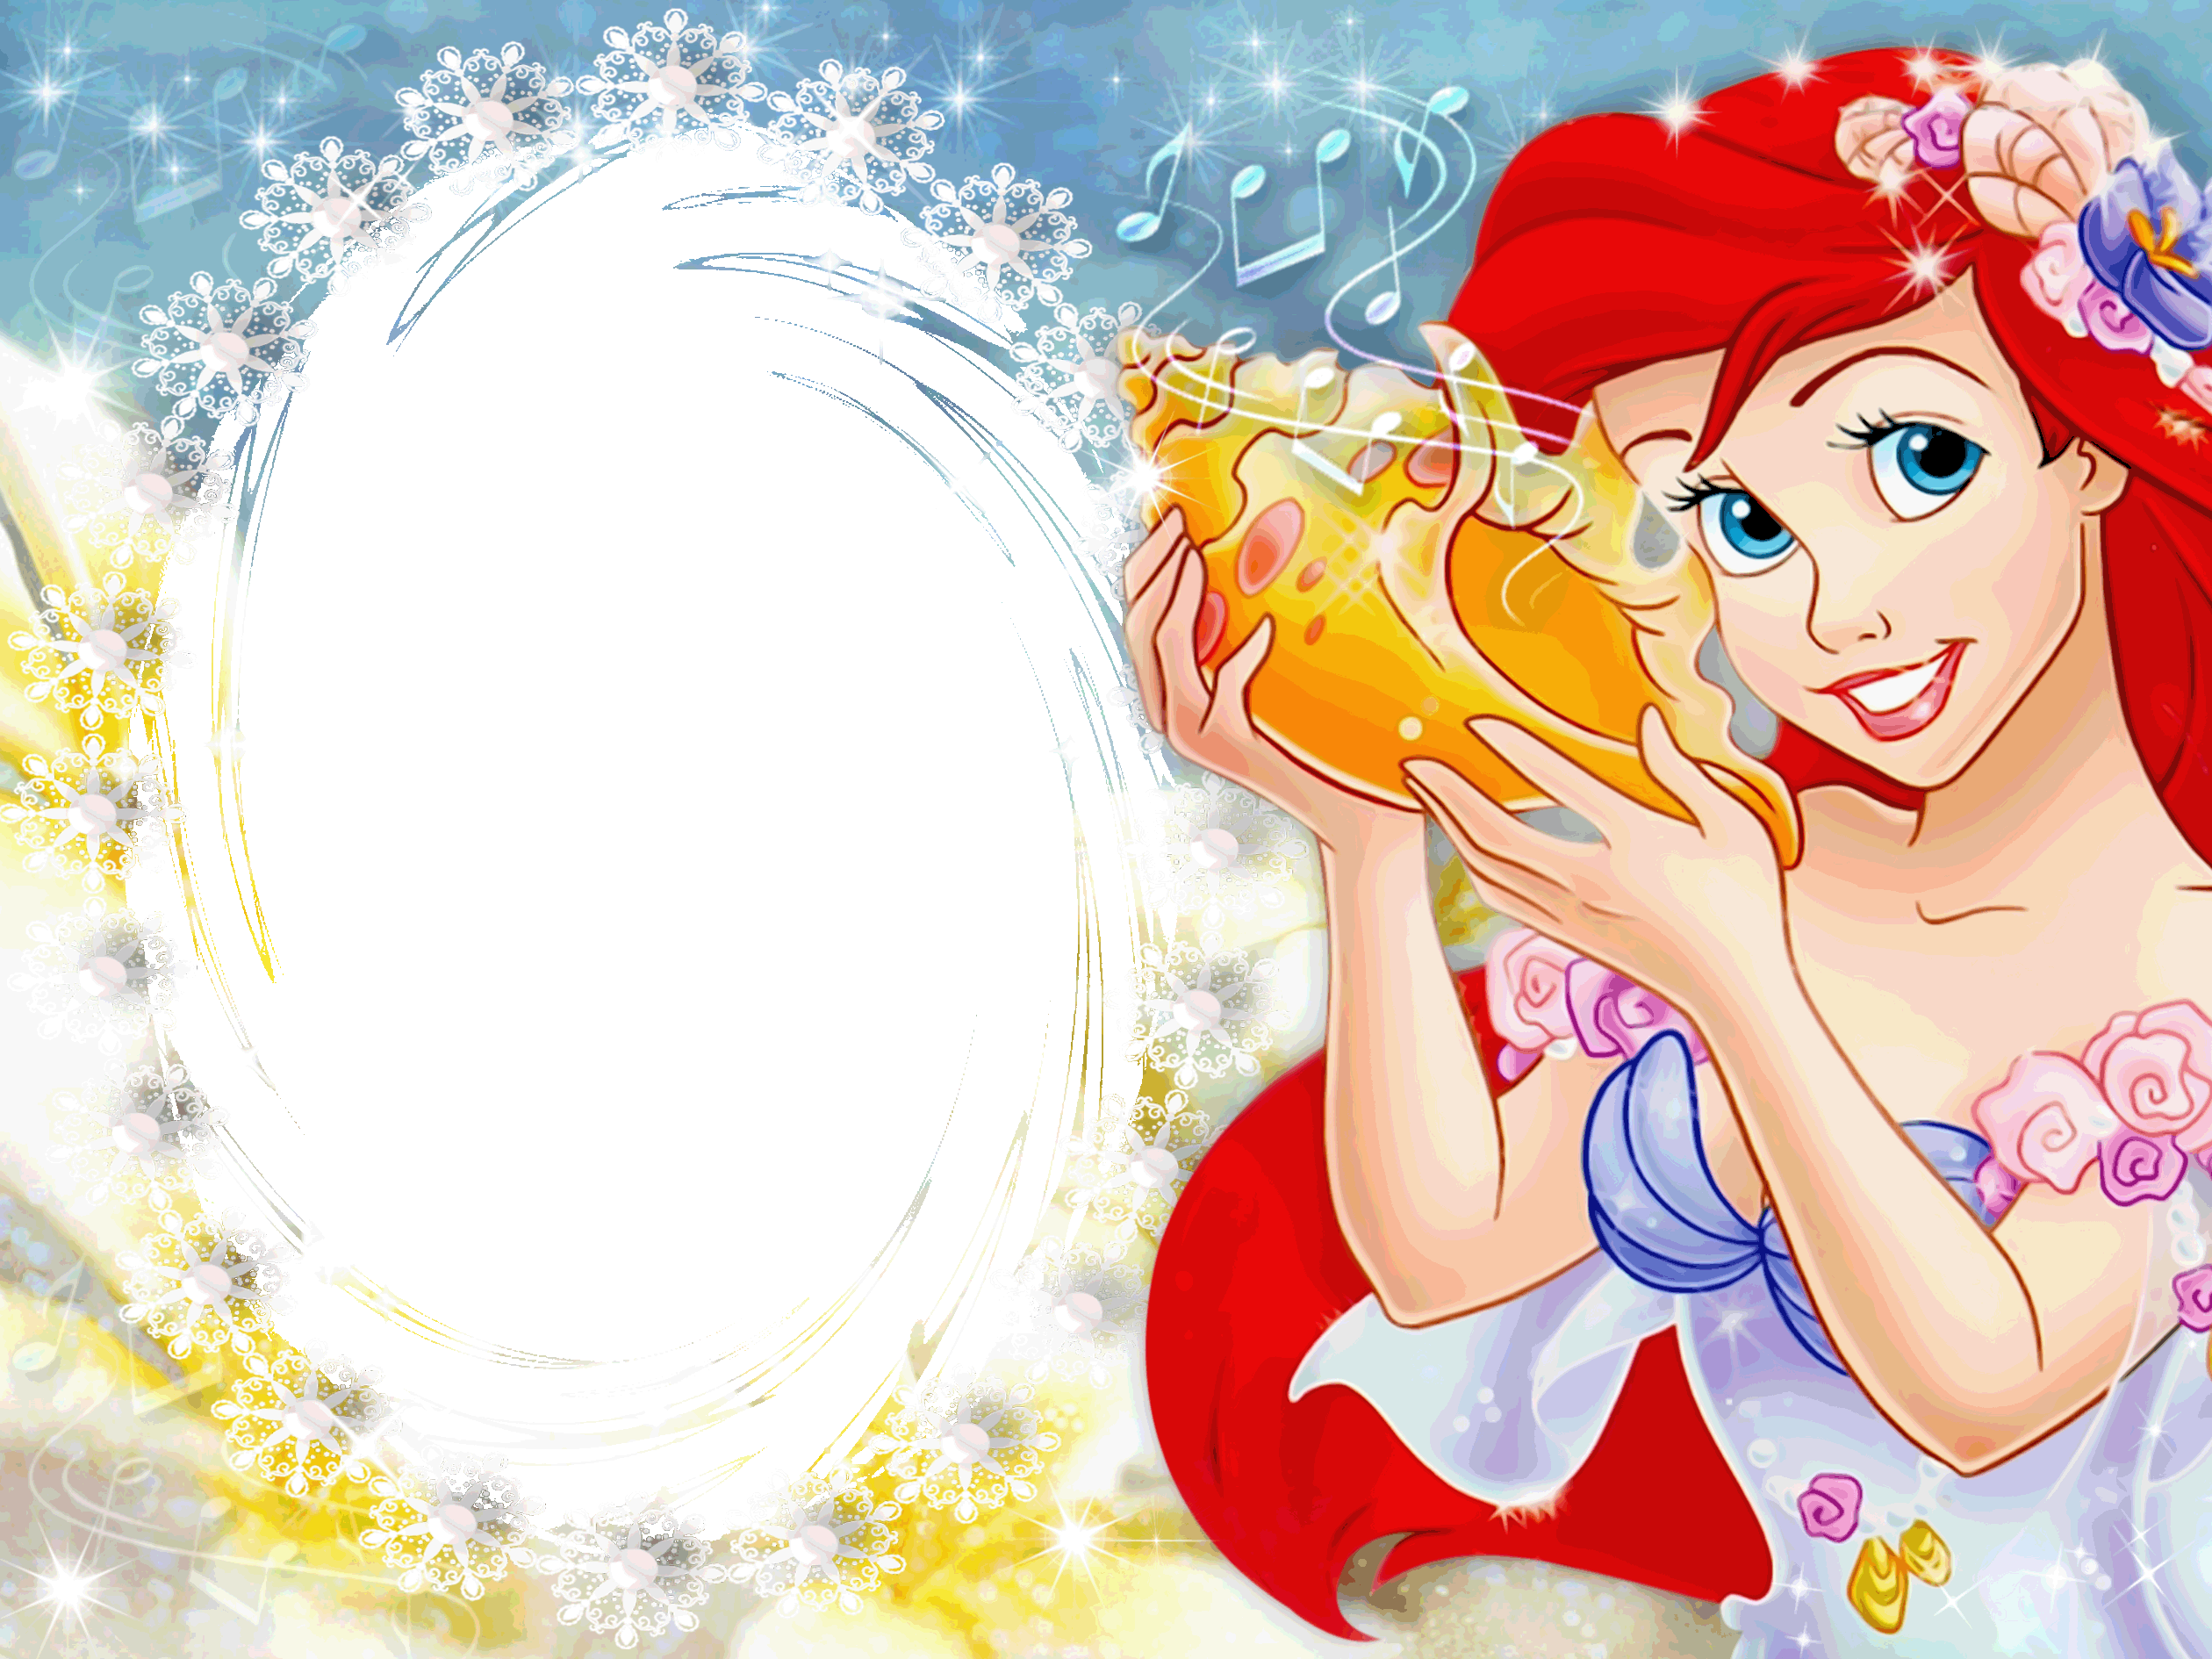 Disney The Little Mermaid Princess Ariel Wallpaper. Foolhardi